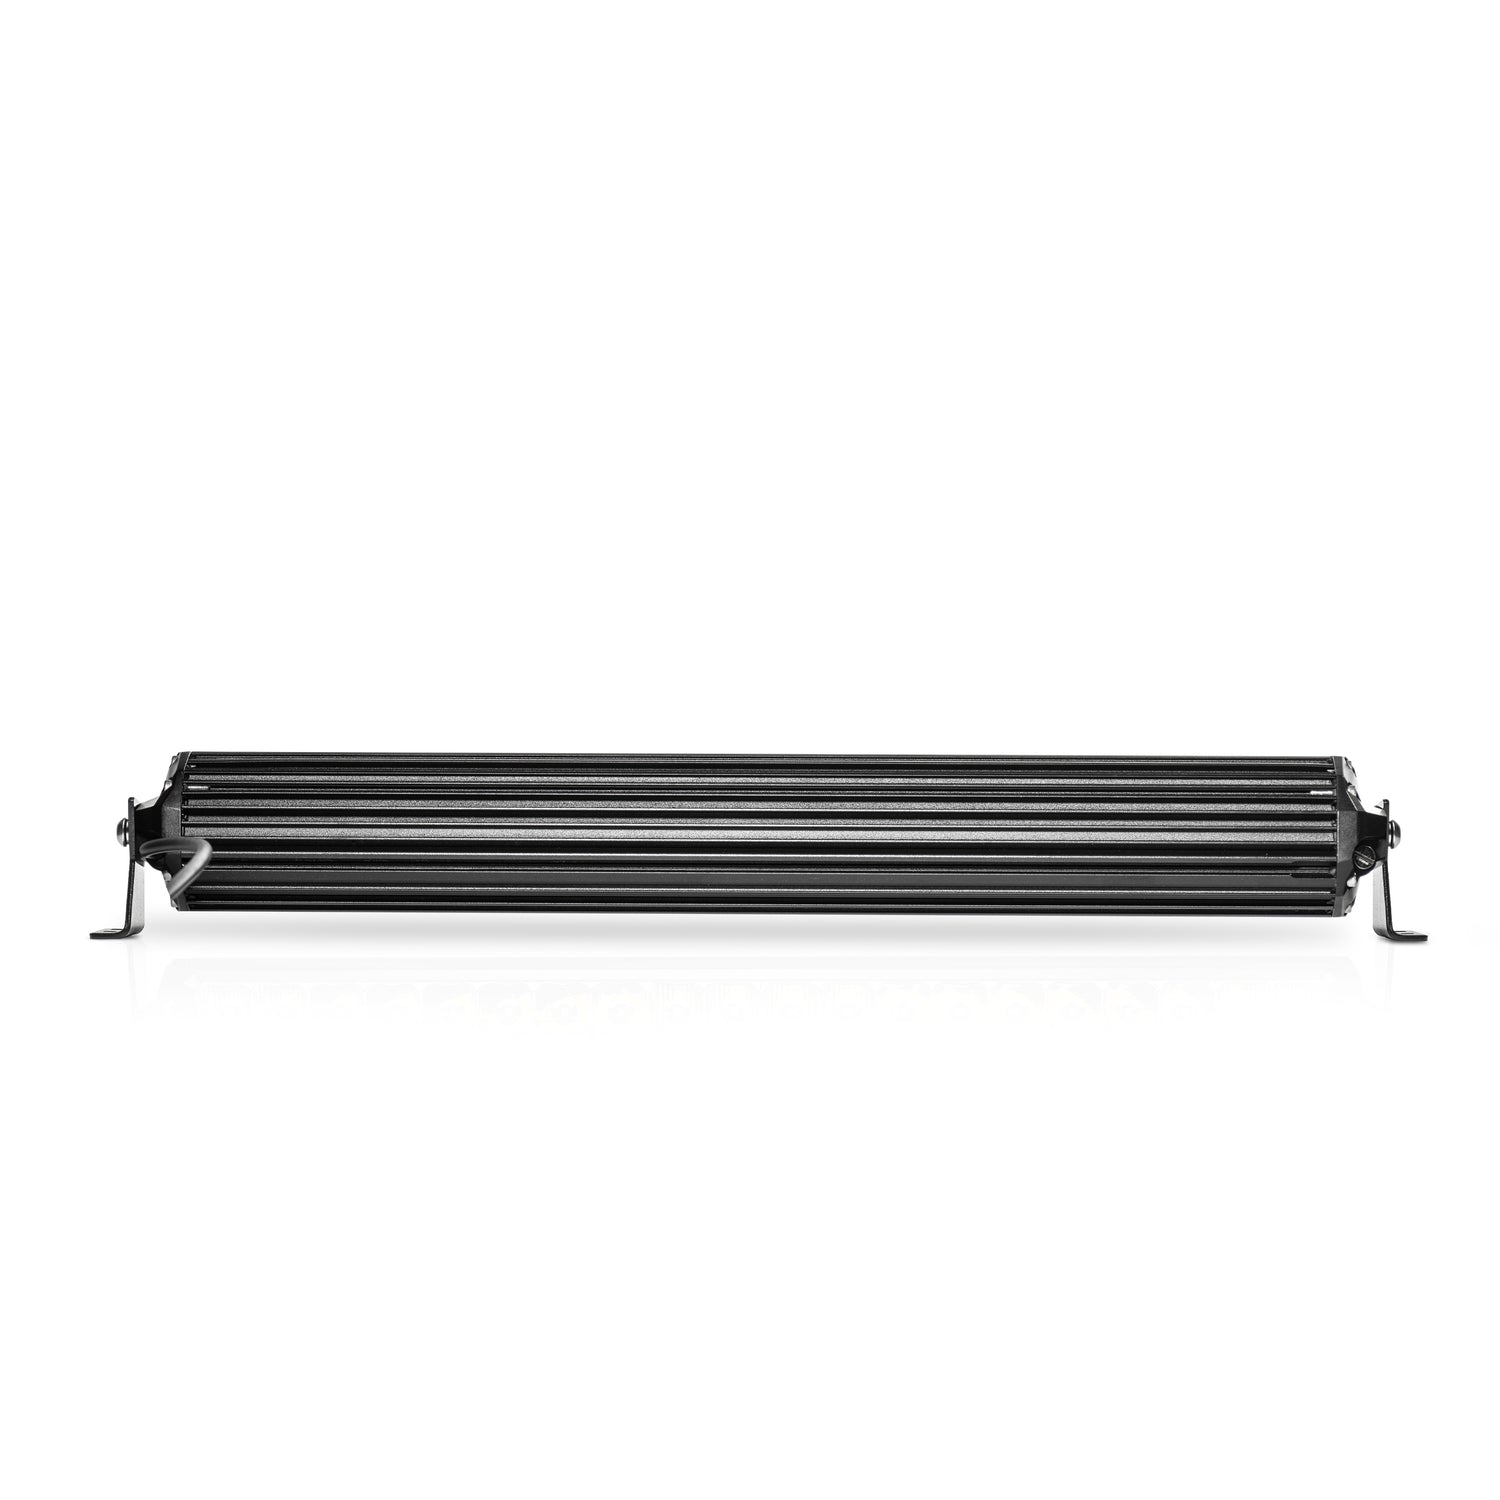 Dual Row LED Light Bars - Rear Sleek Design - North Lights